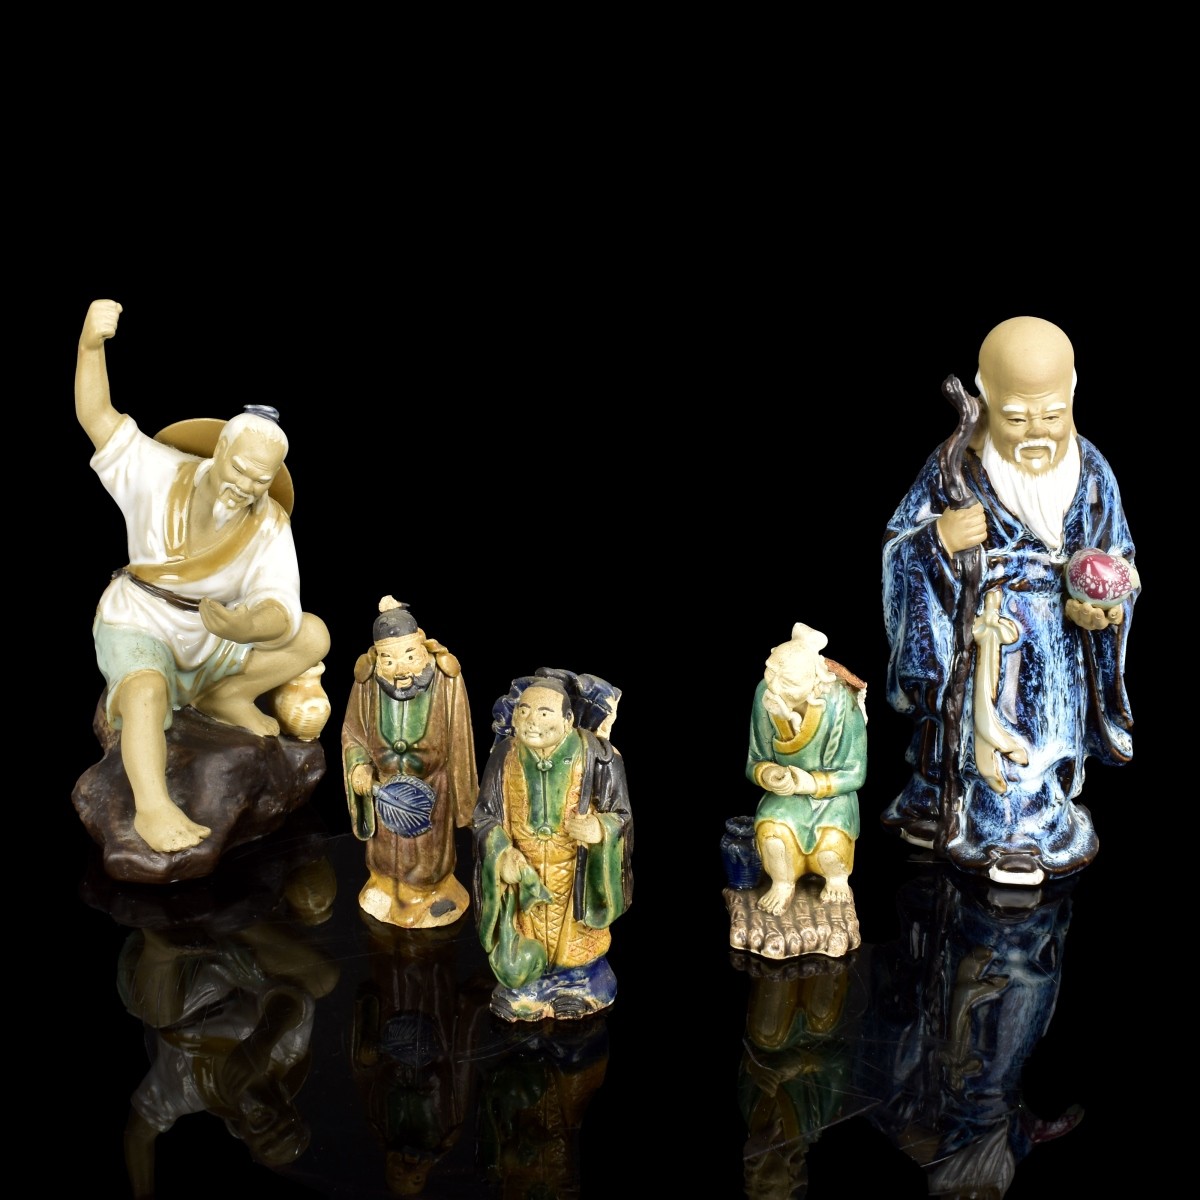 Five Chinese Mud Men Figurines